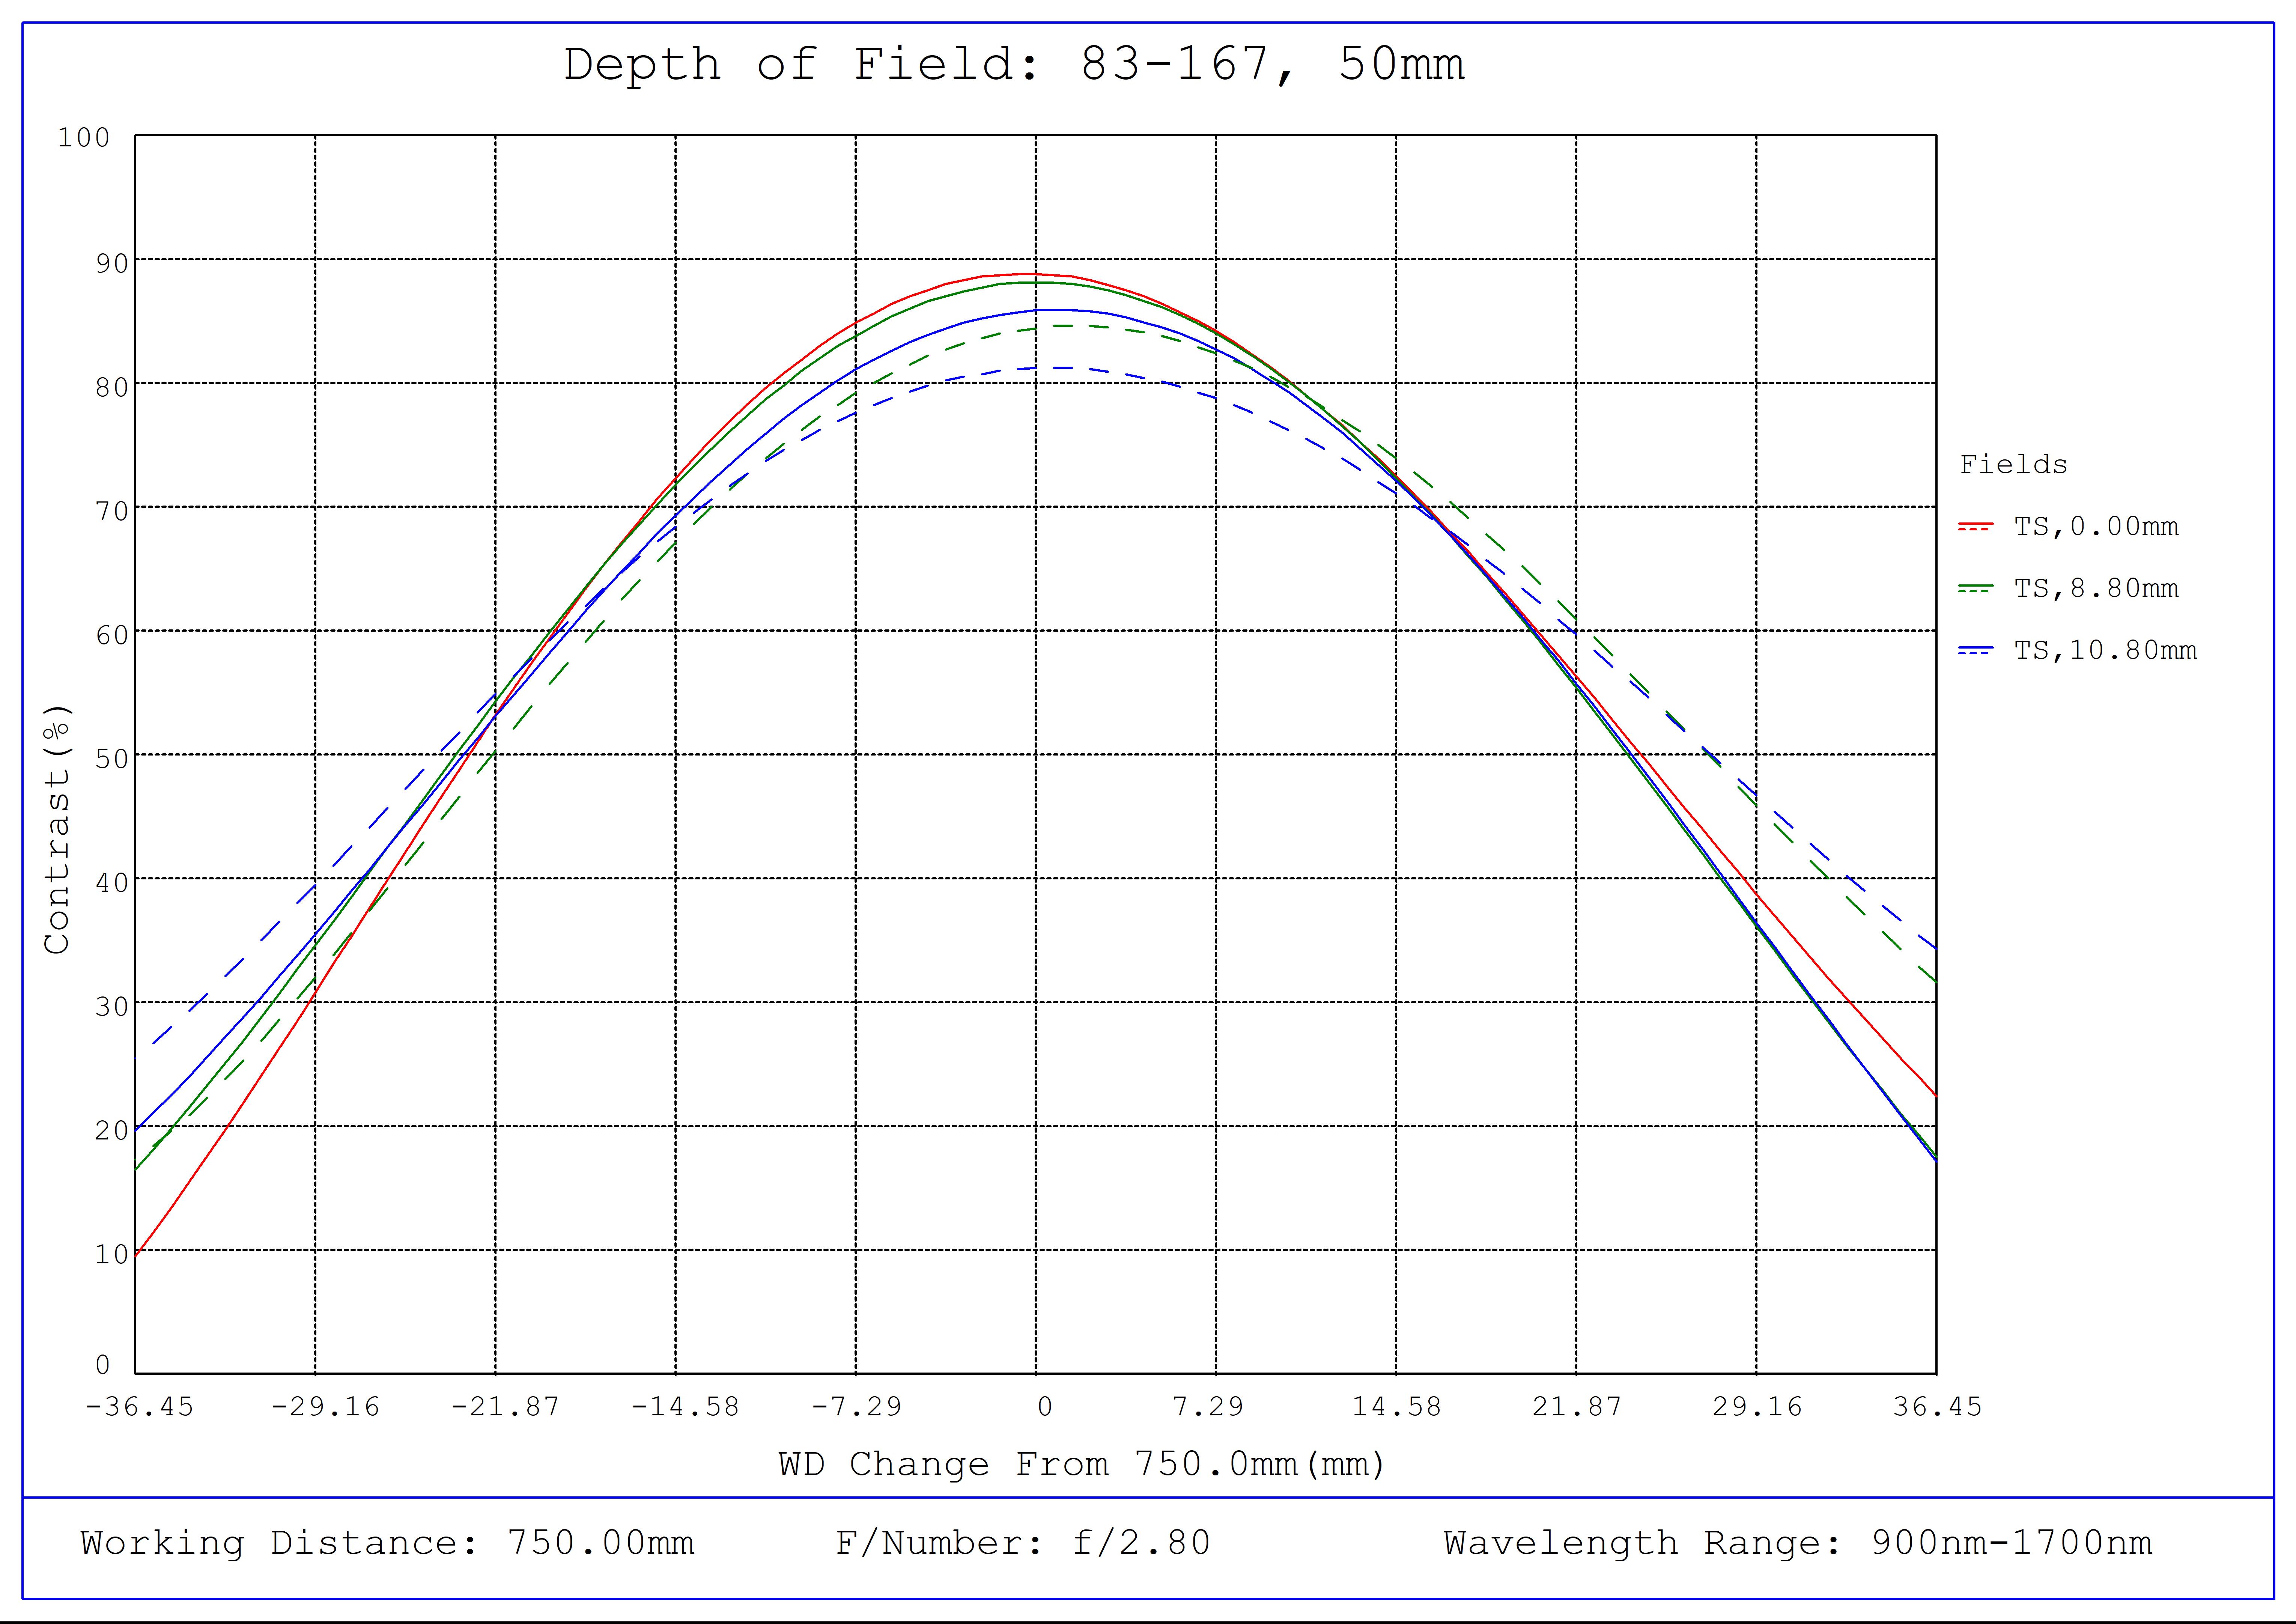 #83-167, 50mm SWIR Series Fixed Focal Length Lens, M42 x 1.0, Depth of Field Plot, 750mm Working Distance, f2.8